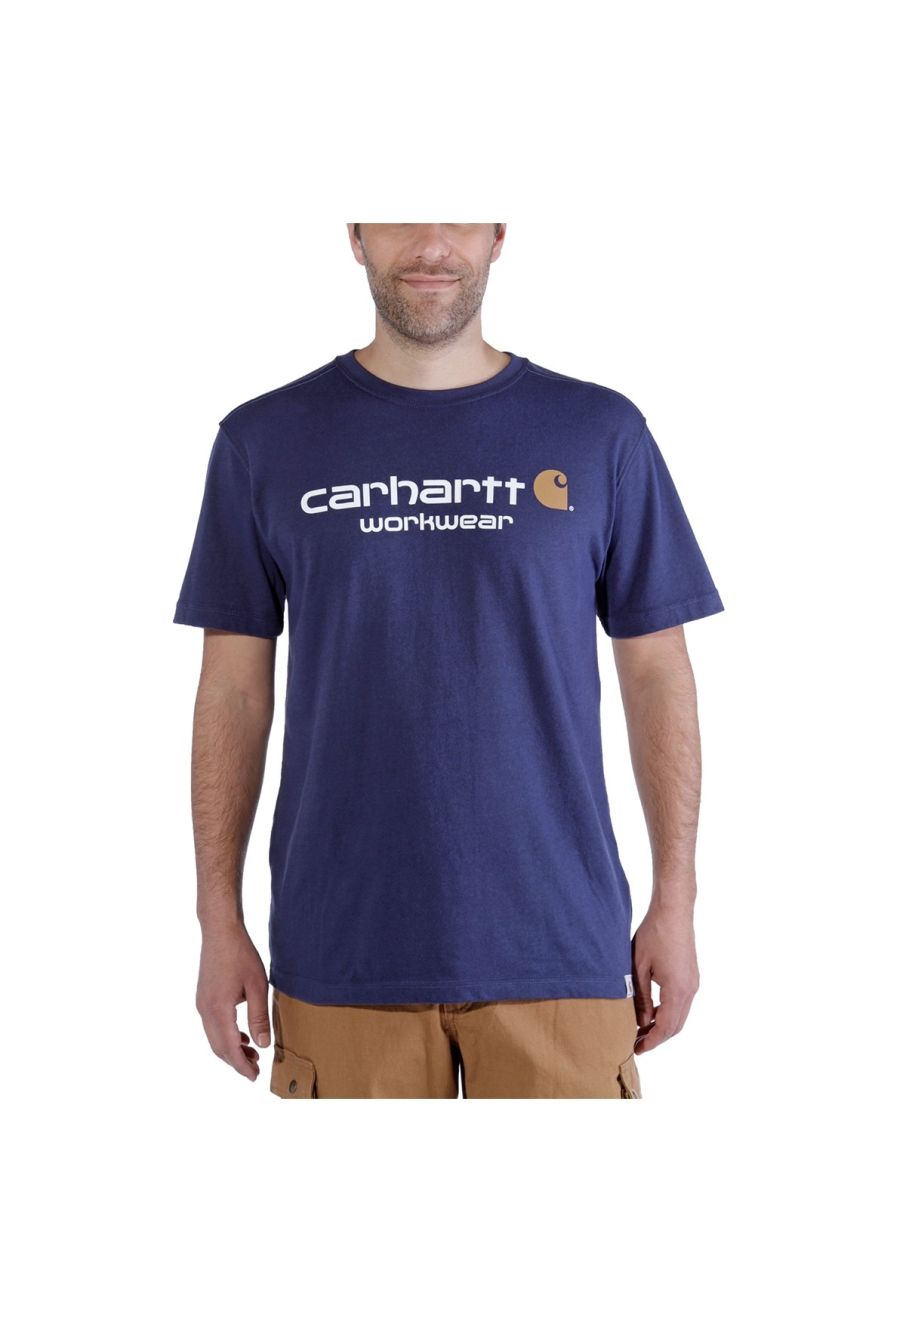 Logo Carhartt s/s 101214 - T-Shirt White Core